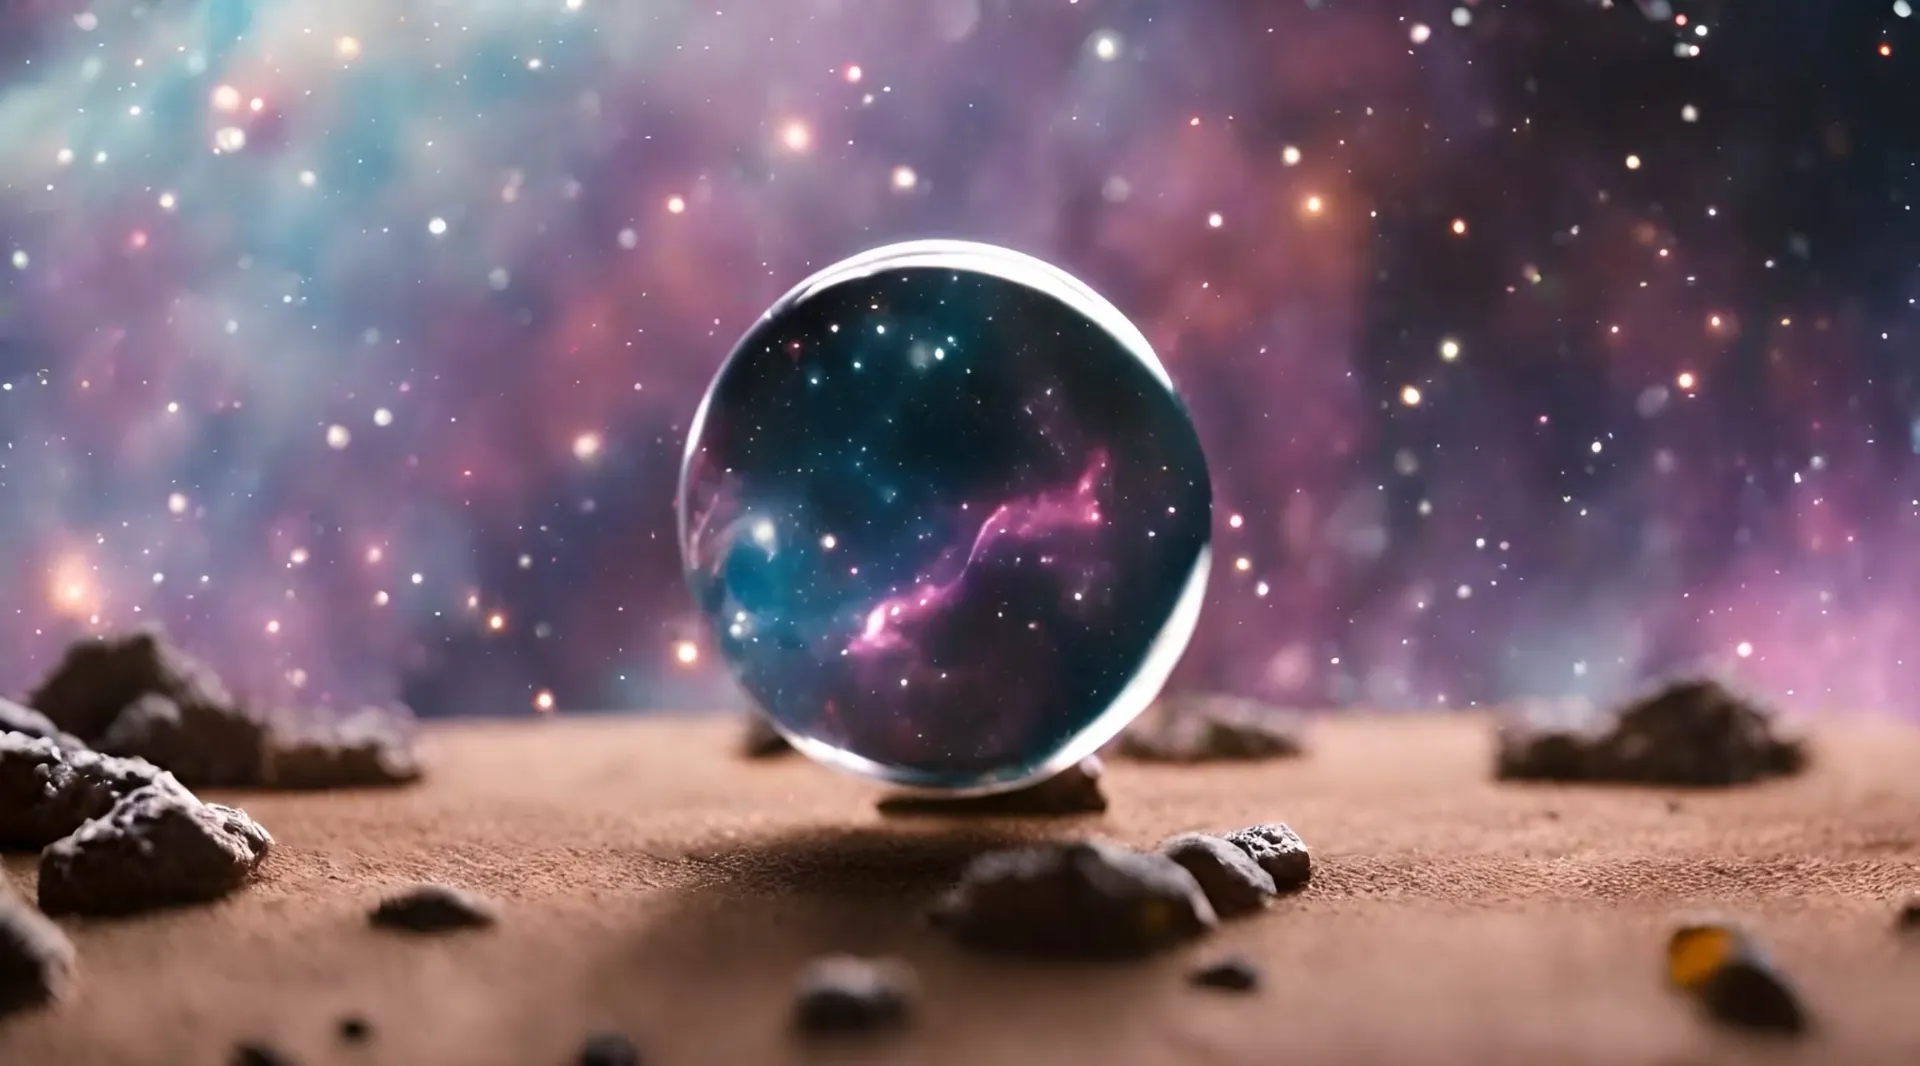 Galactic Sphere Mystique Space Backdrop